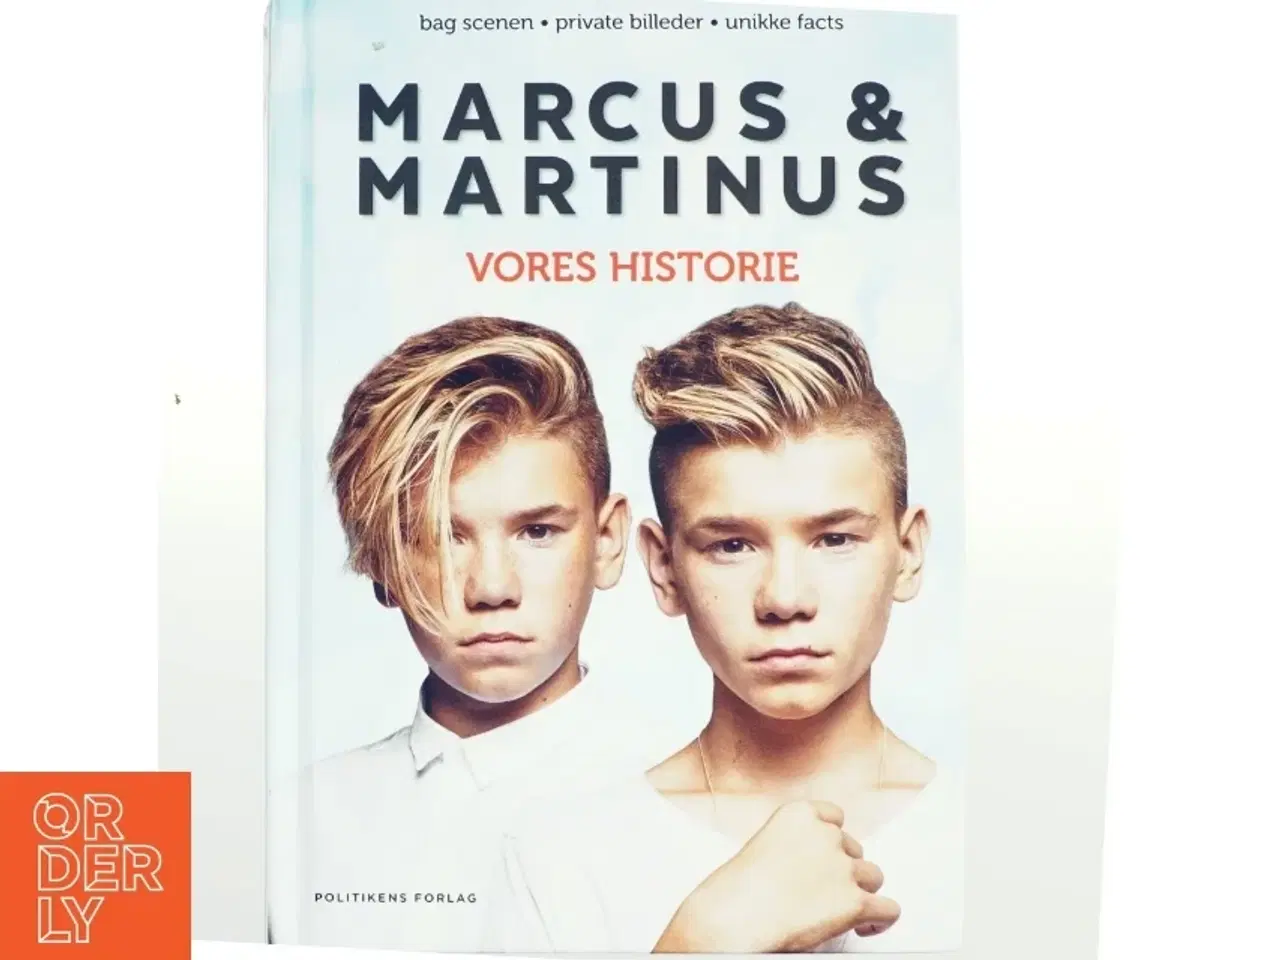 Billede 1 - Vores historie, Marcus&Martinus